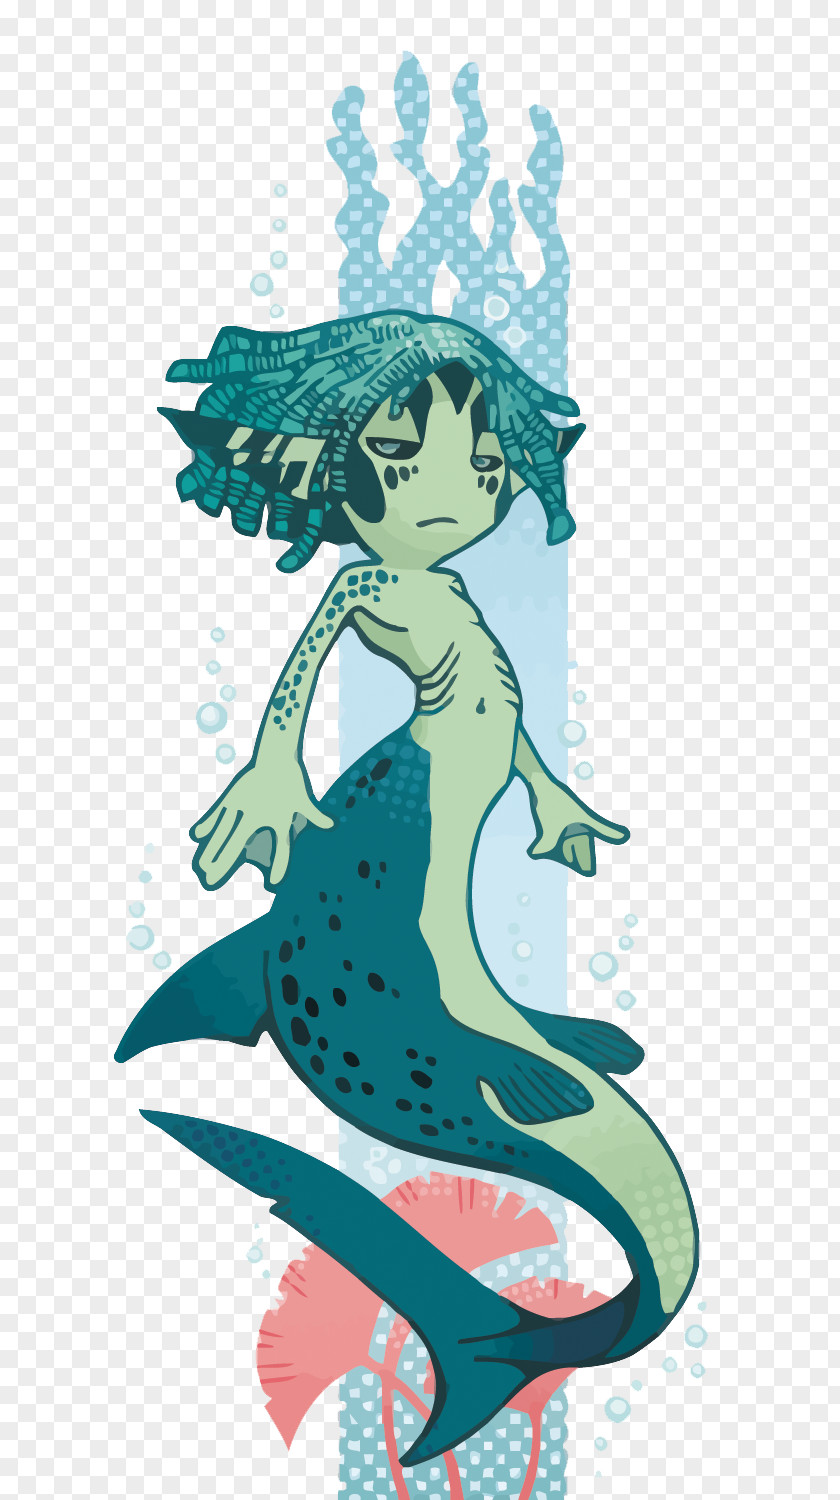 Vector Shark Man The Little Mermaid Cartoon Visual Arts Illustration PNG